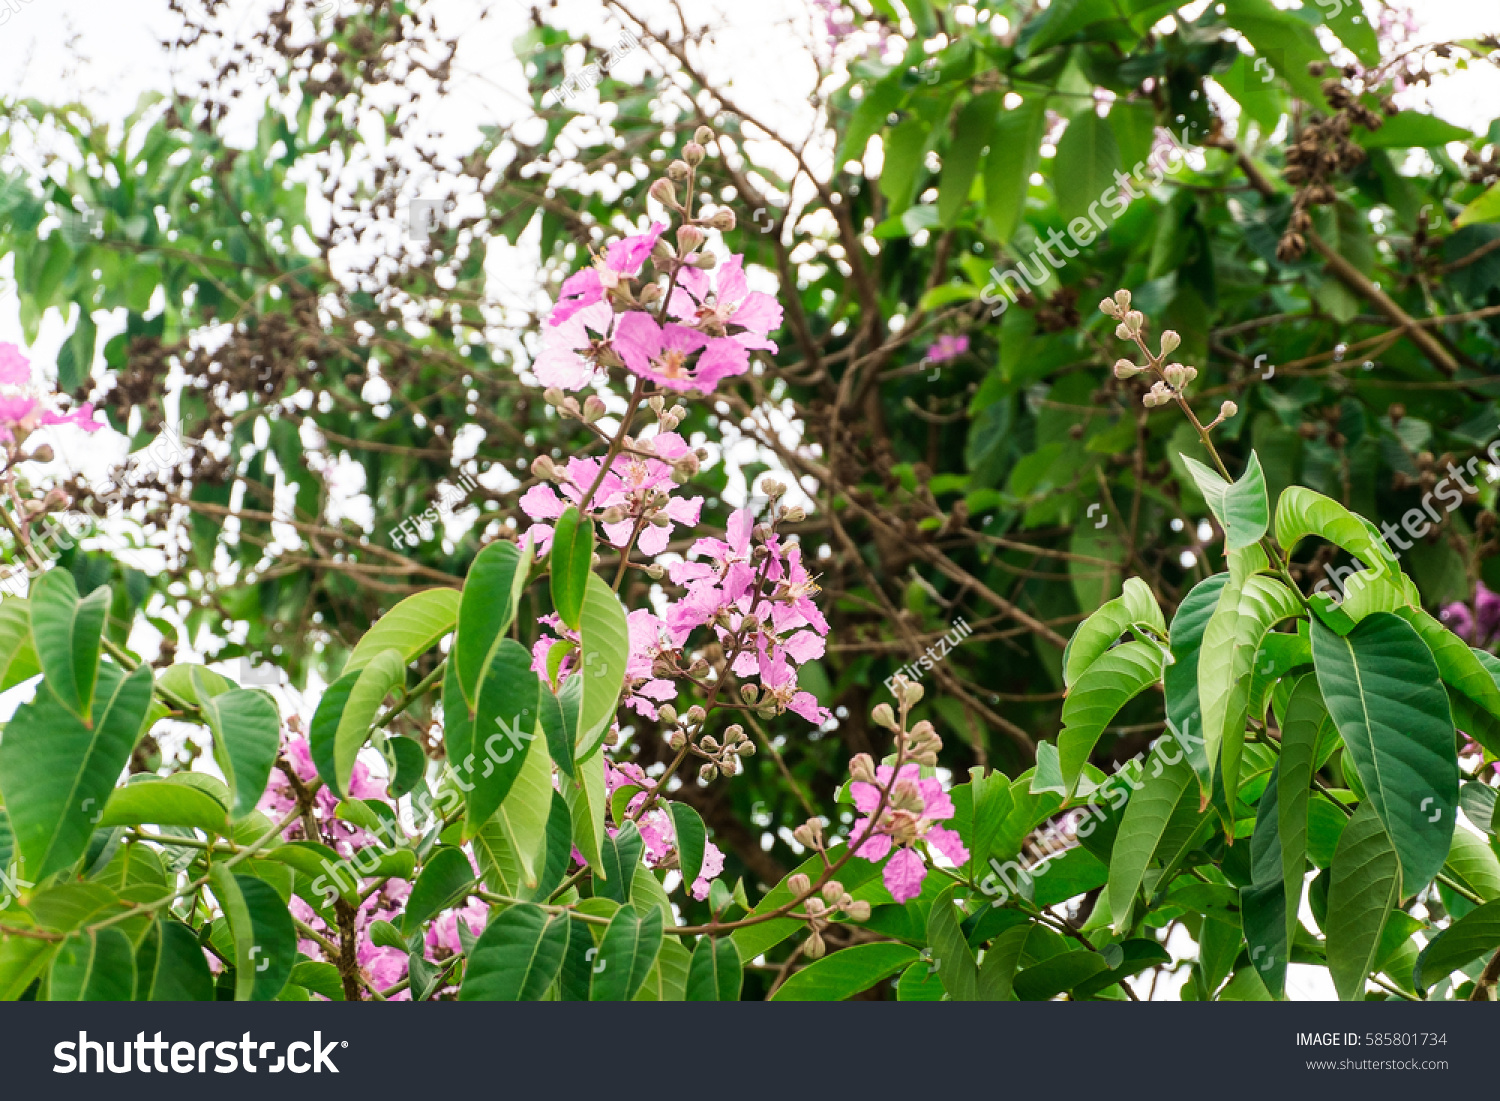 Beautiful Flower On Tree Green Leaves Stock Photo 585801734 - Shutterstock